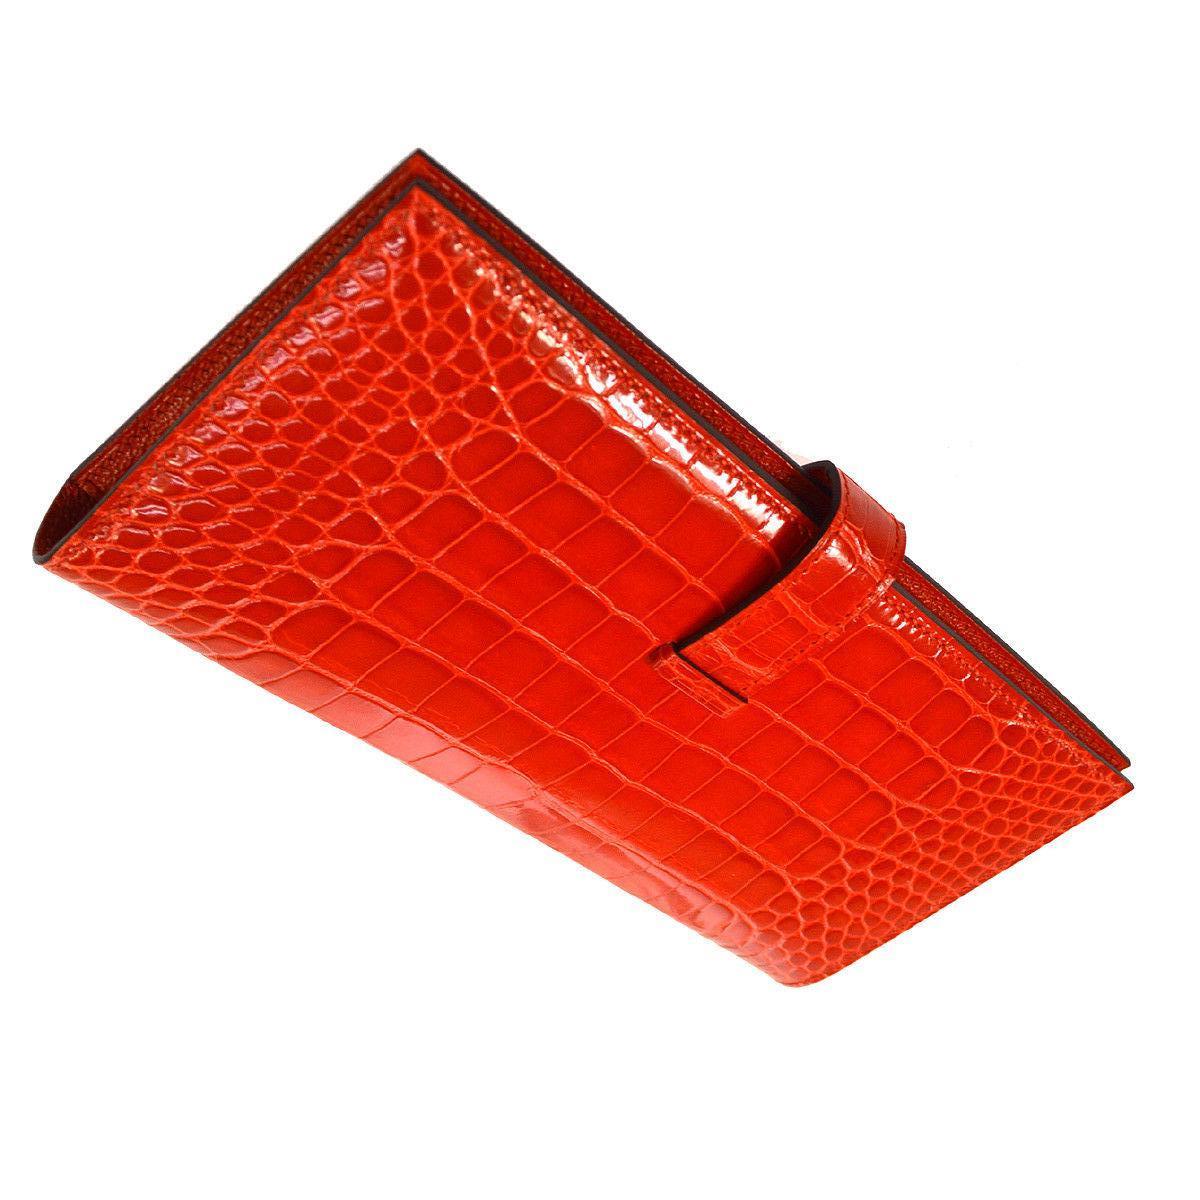 Red Hermes Alligator Exotic Leather 'H' Logo Gold Evening Clutch Wallet Bag in Box